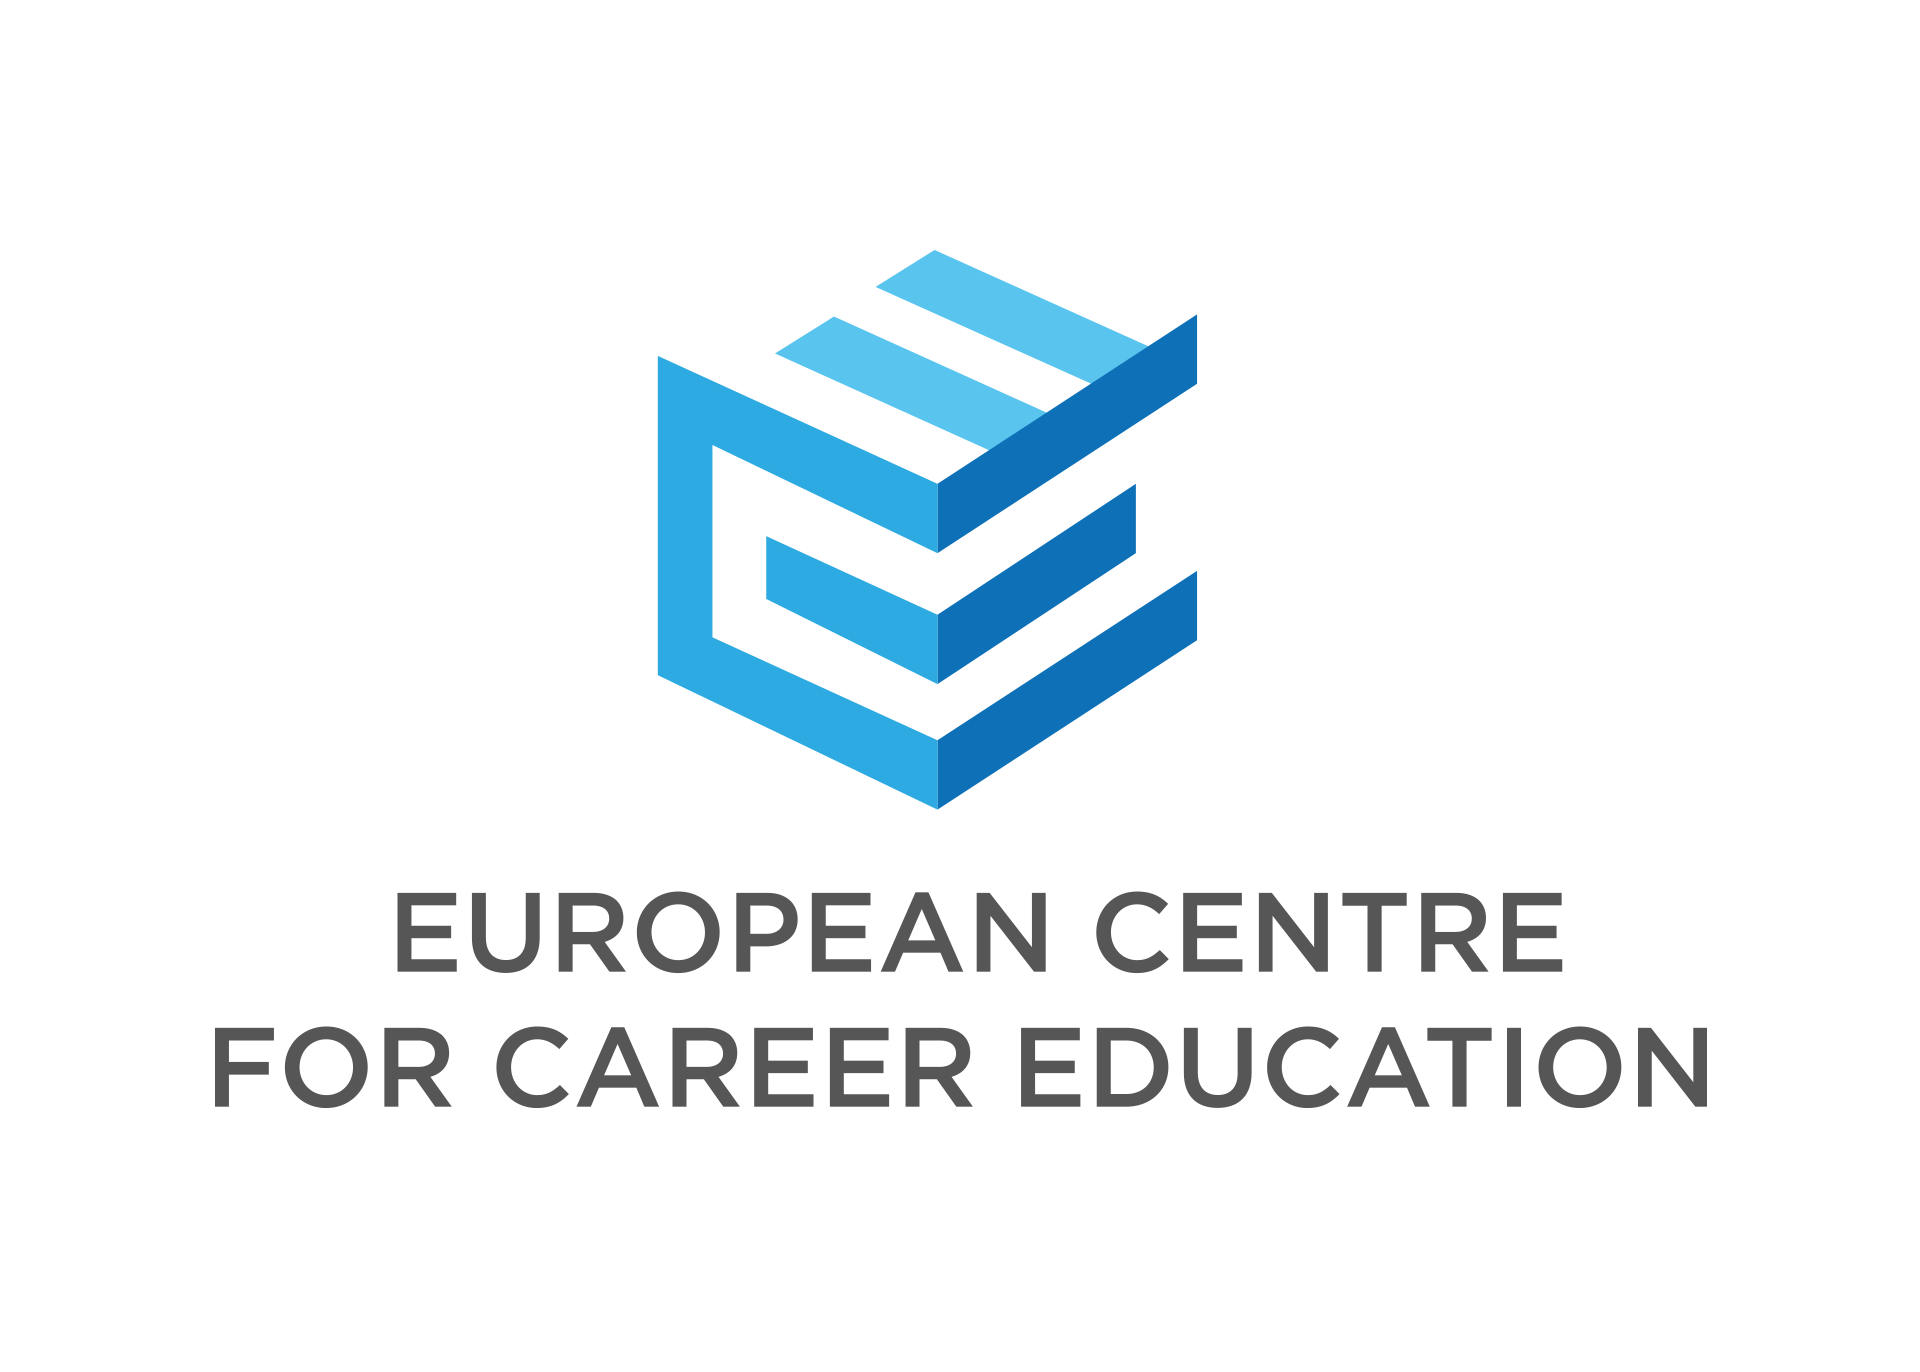 European centre for career education